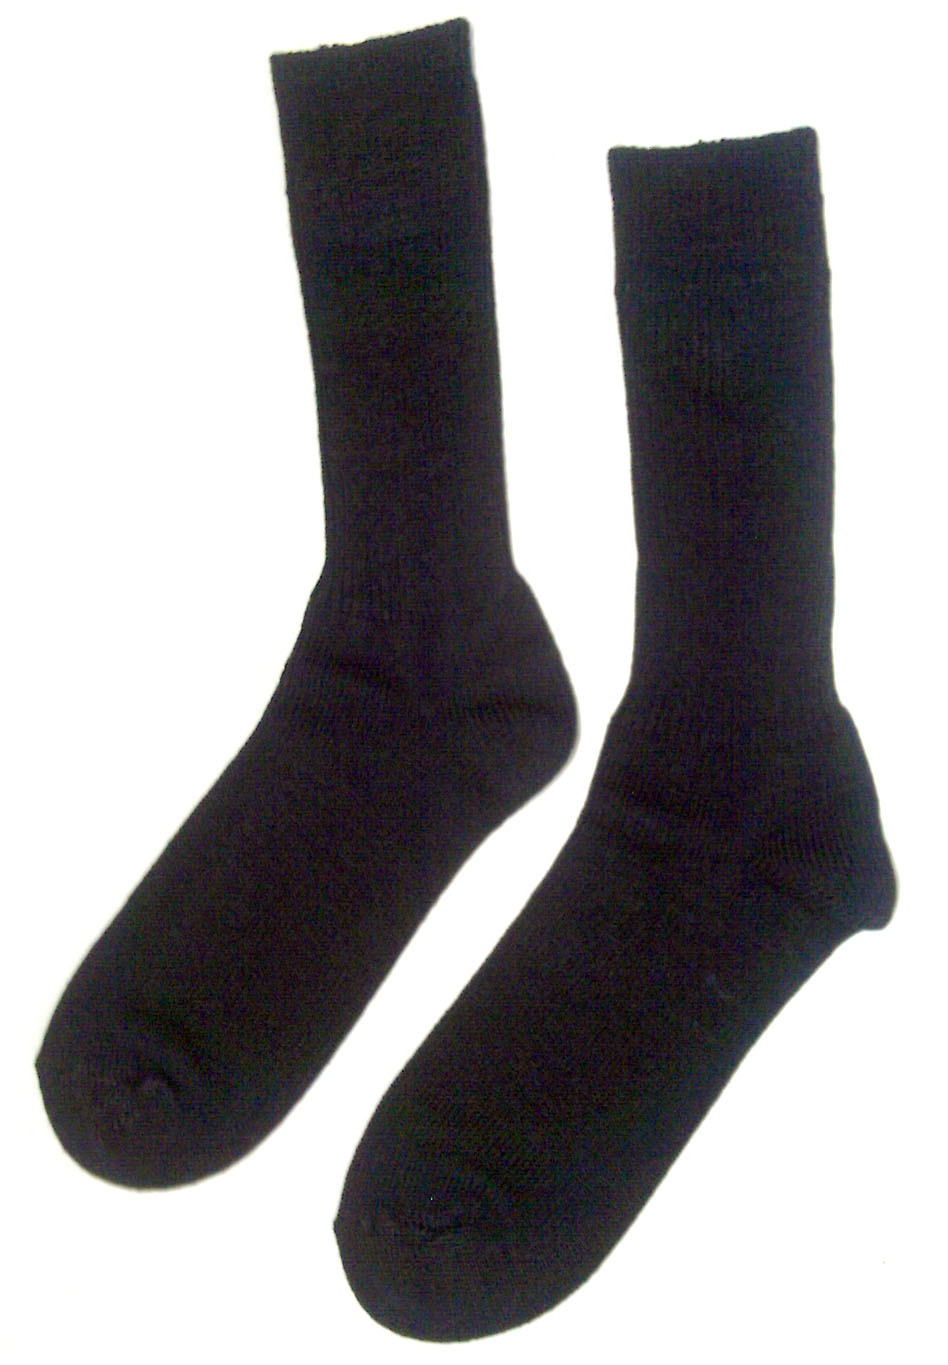 pairs socks